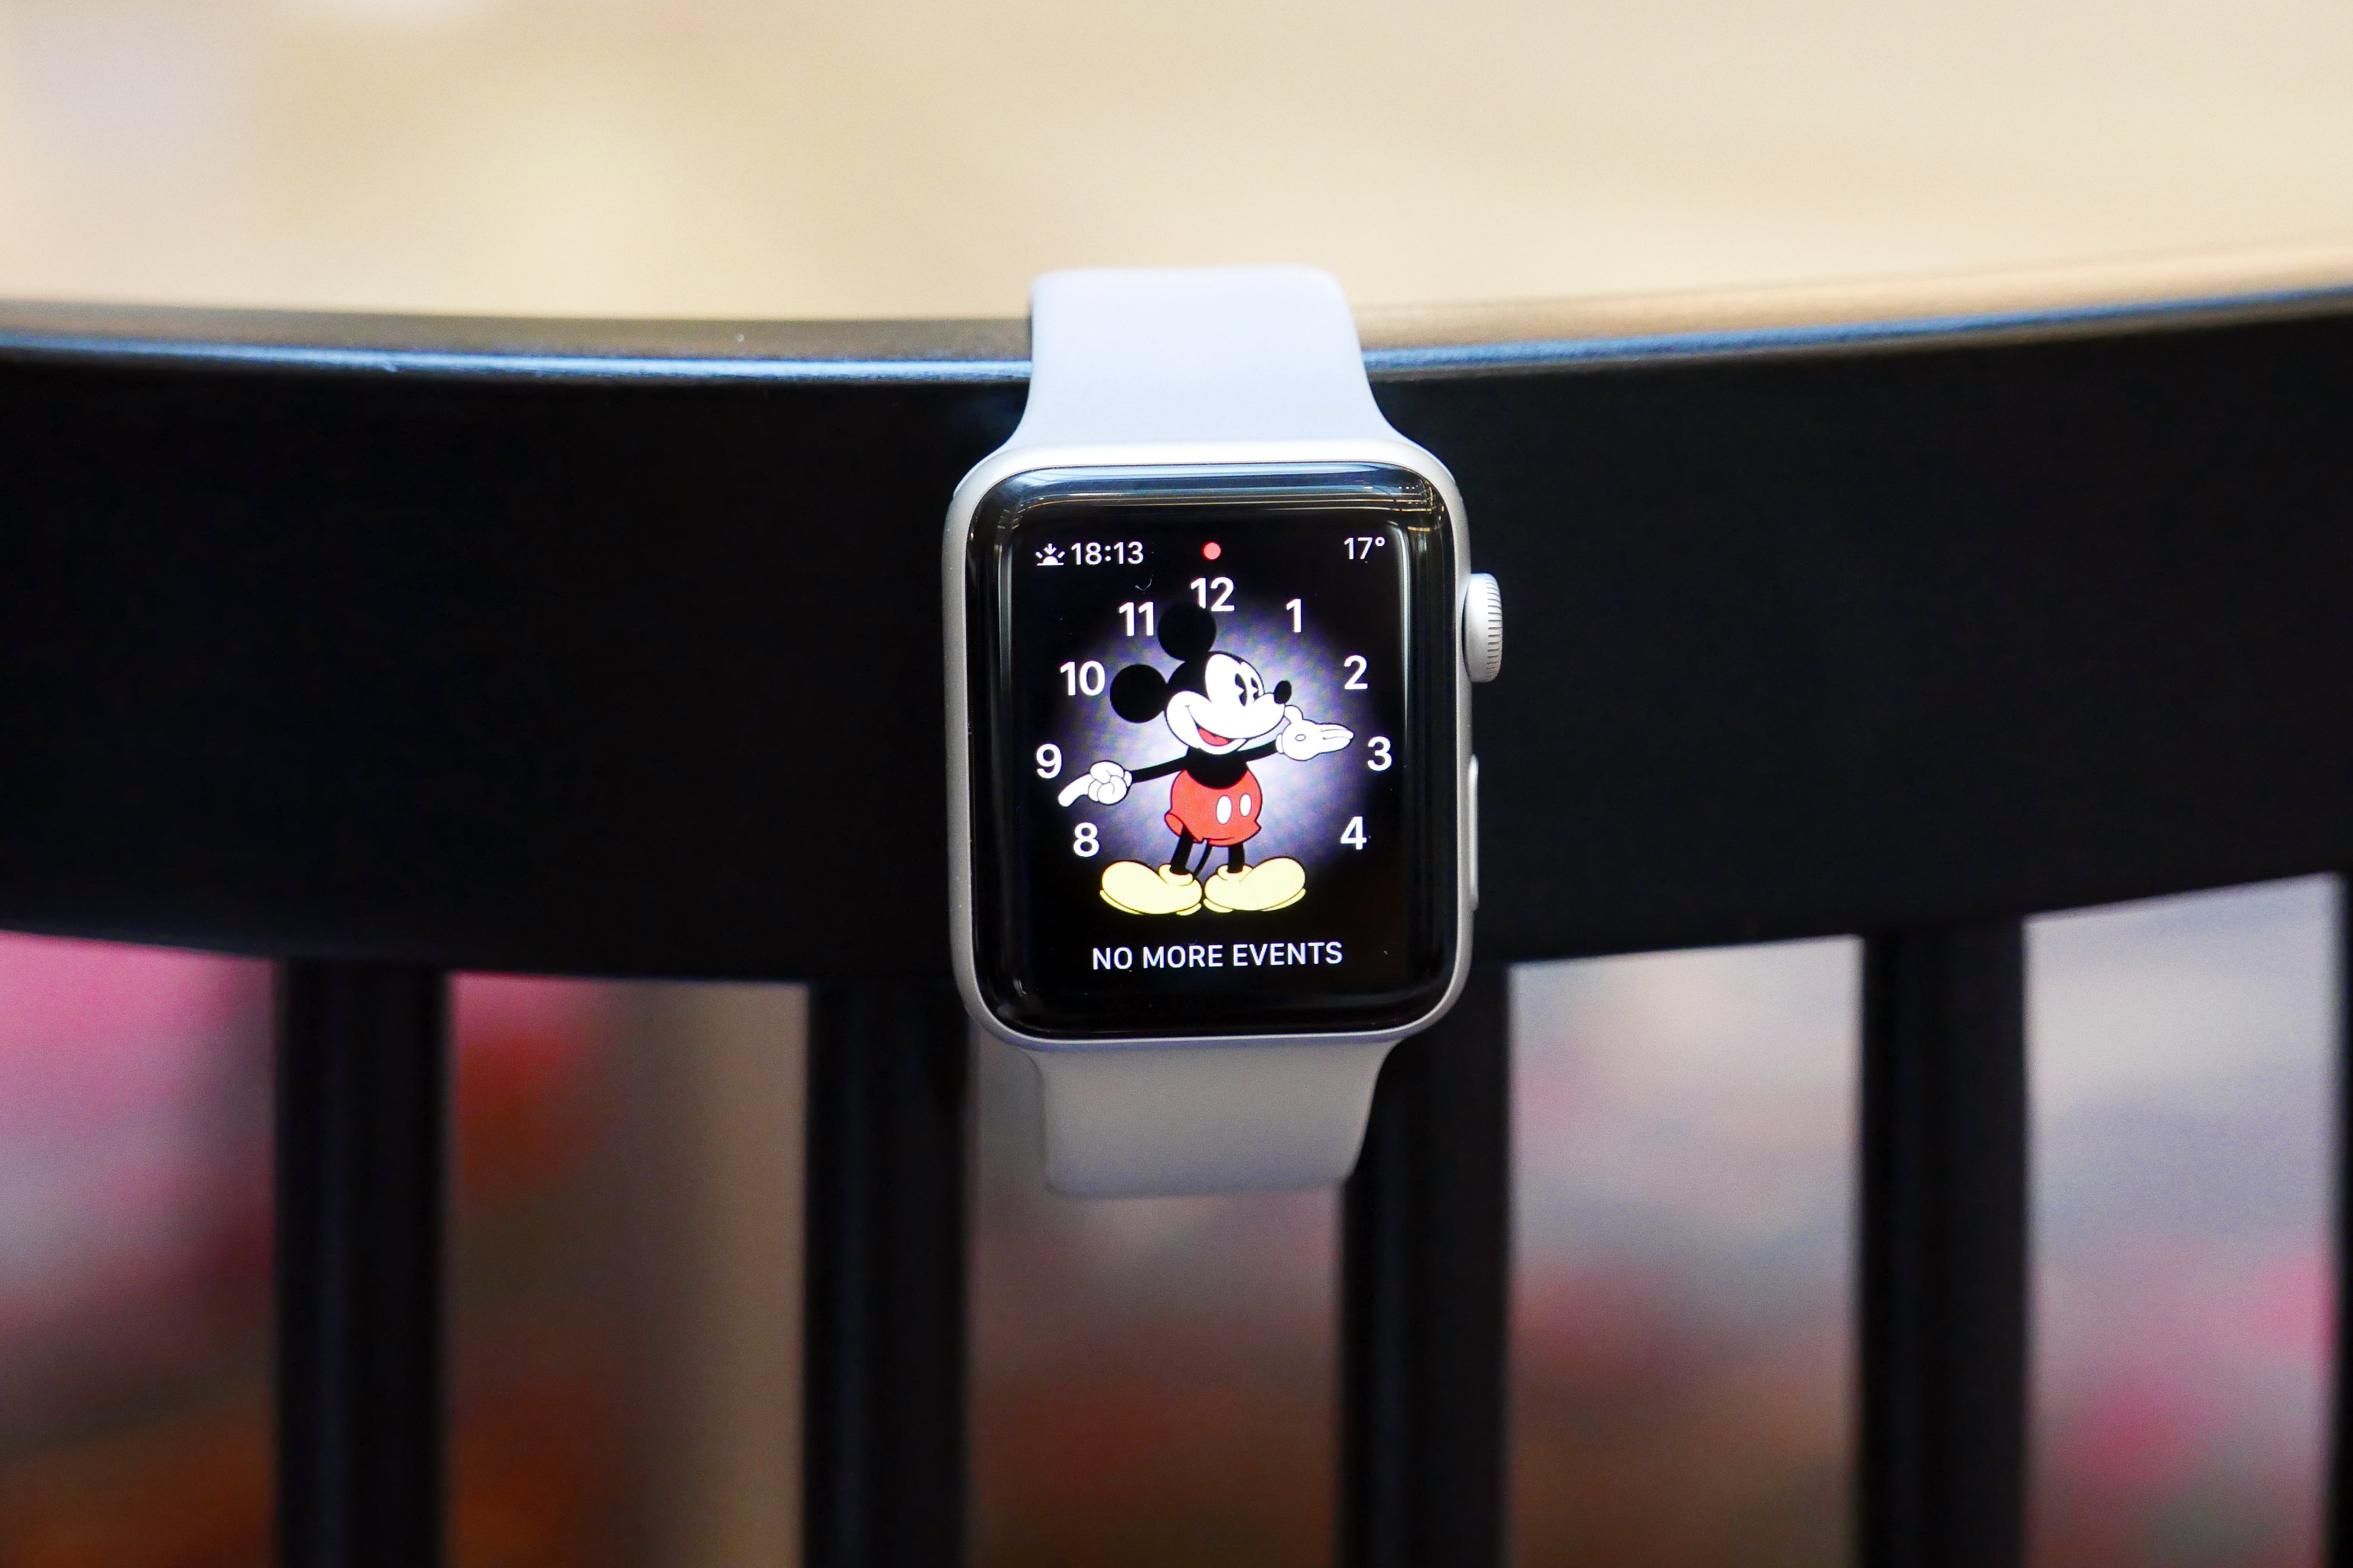 Watch watches как правильно часы. Apple watch 3. Smart часы Apple IWATCH 6. Экран эпл вотч 3. Apple IWATCH 3 экран.